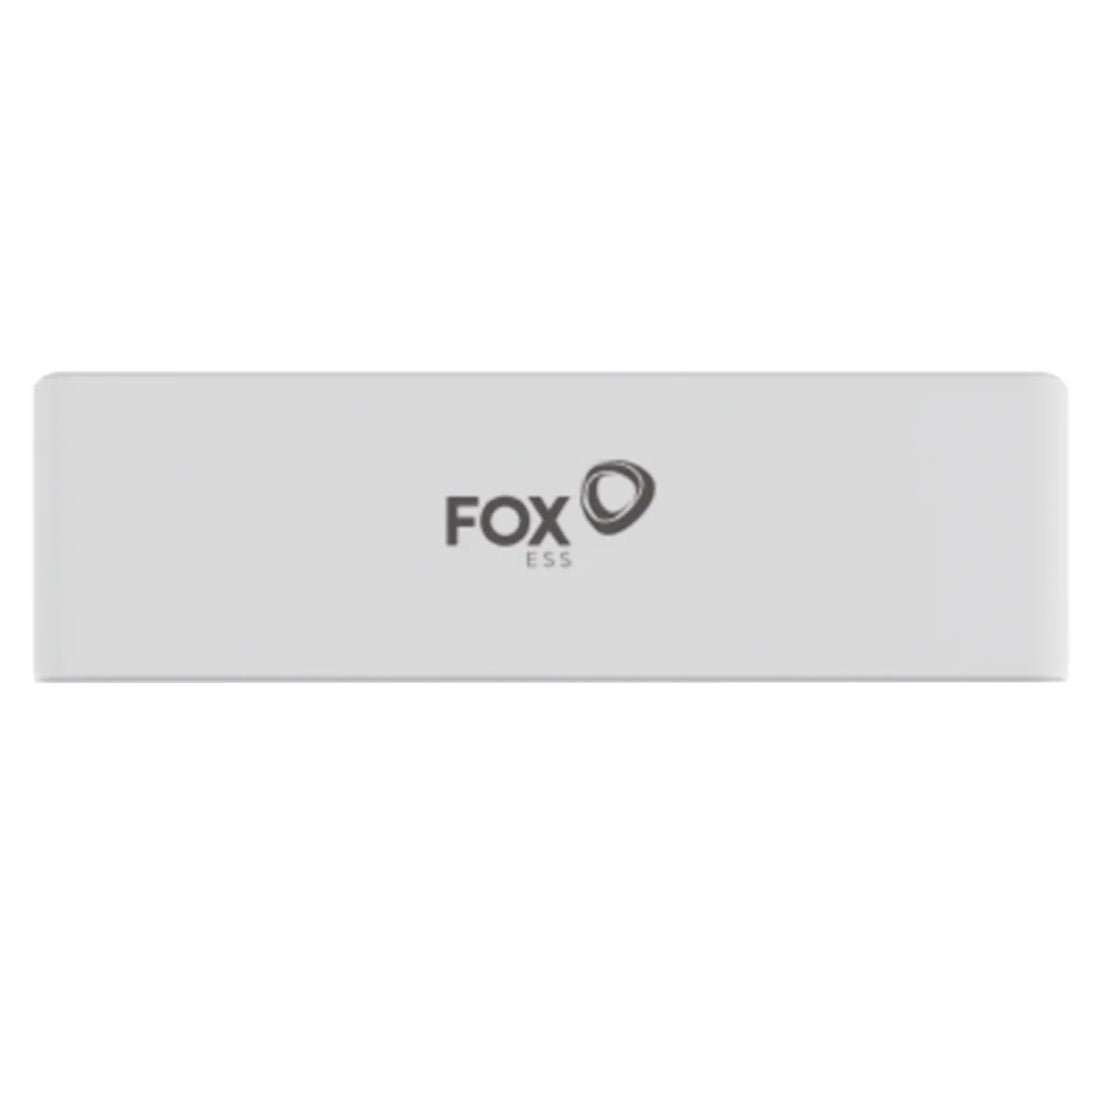 Stockage solaire FOX-ESS ECS2900-H3 8,64 kWh